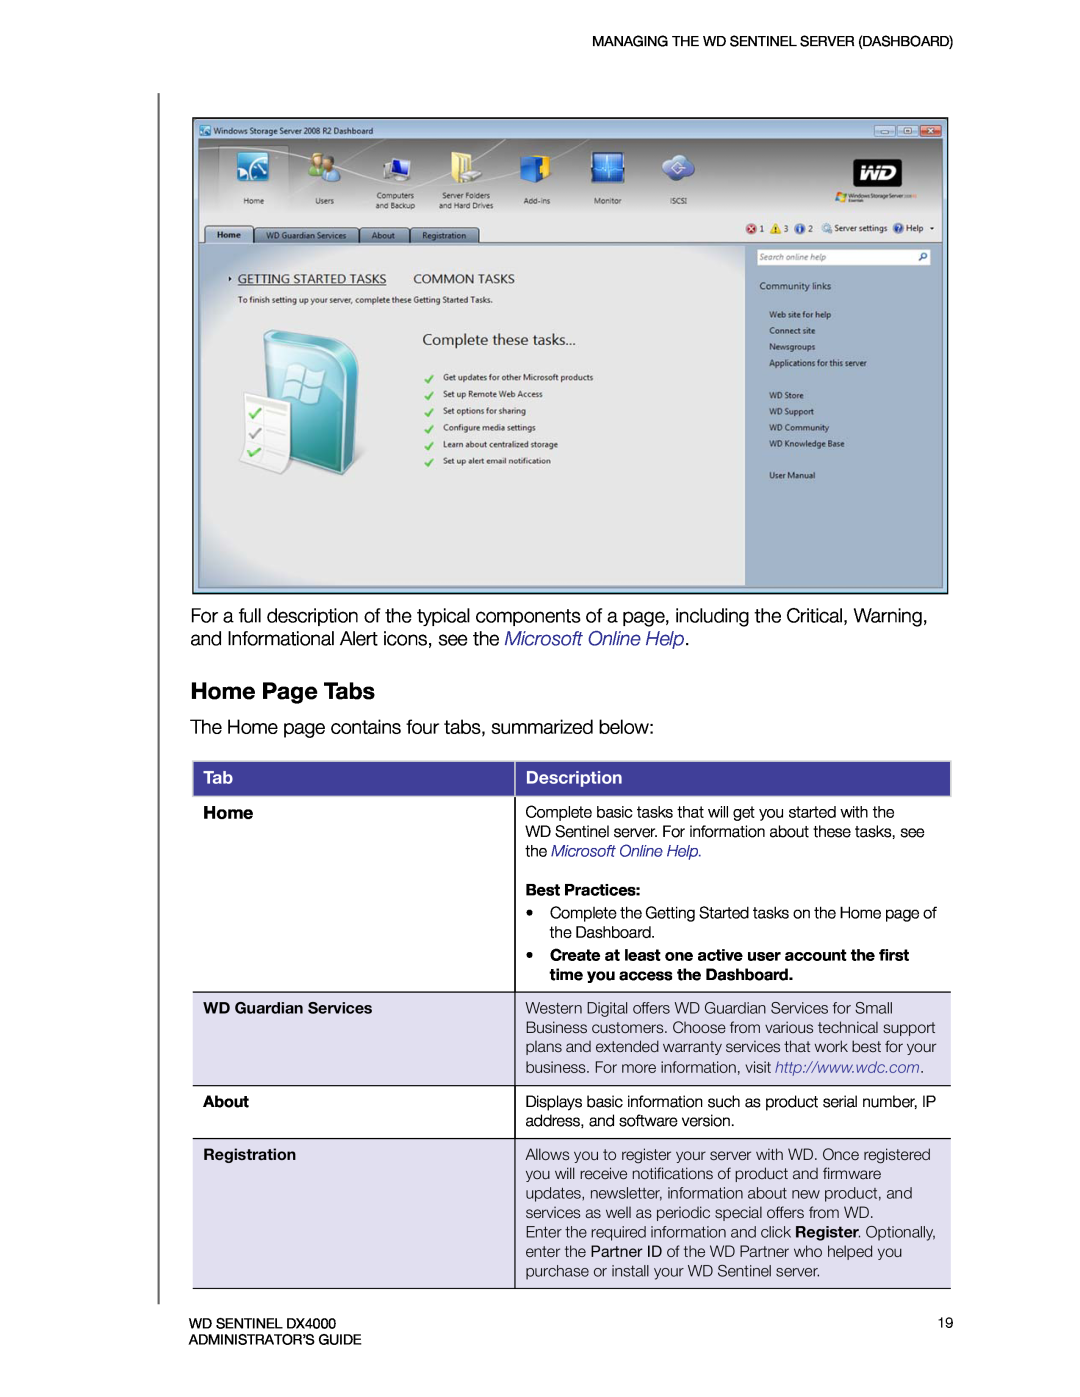 Western Digital WDBLGT0080KBK Home Page Tabs, Description, the Microsoft Online Help, Best Practices, WD Guardian Services 